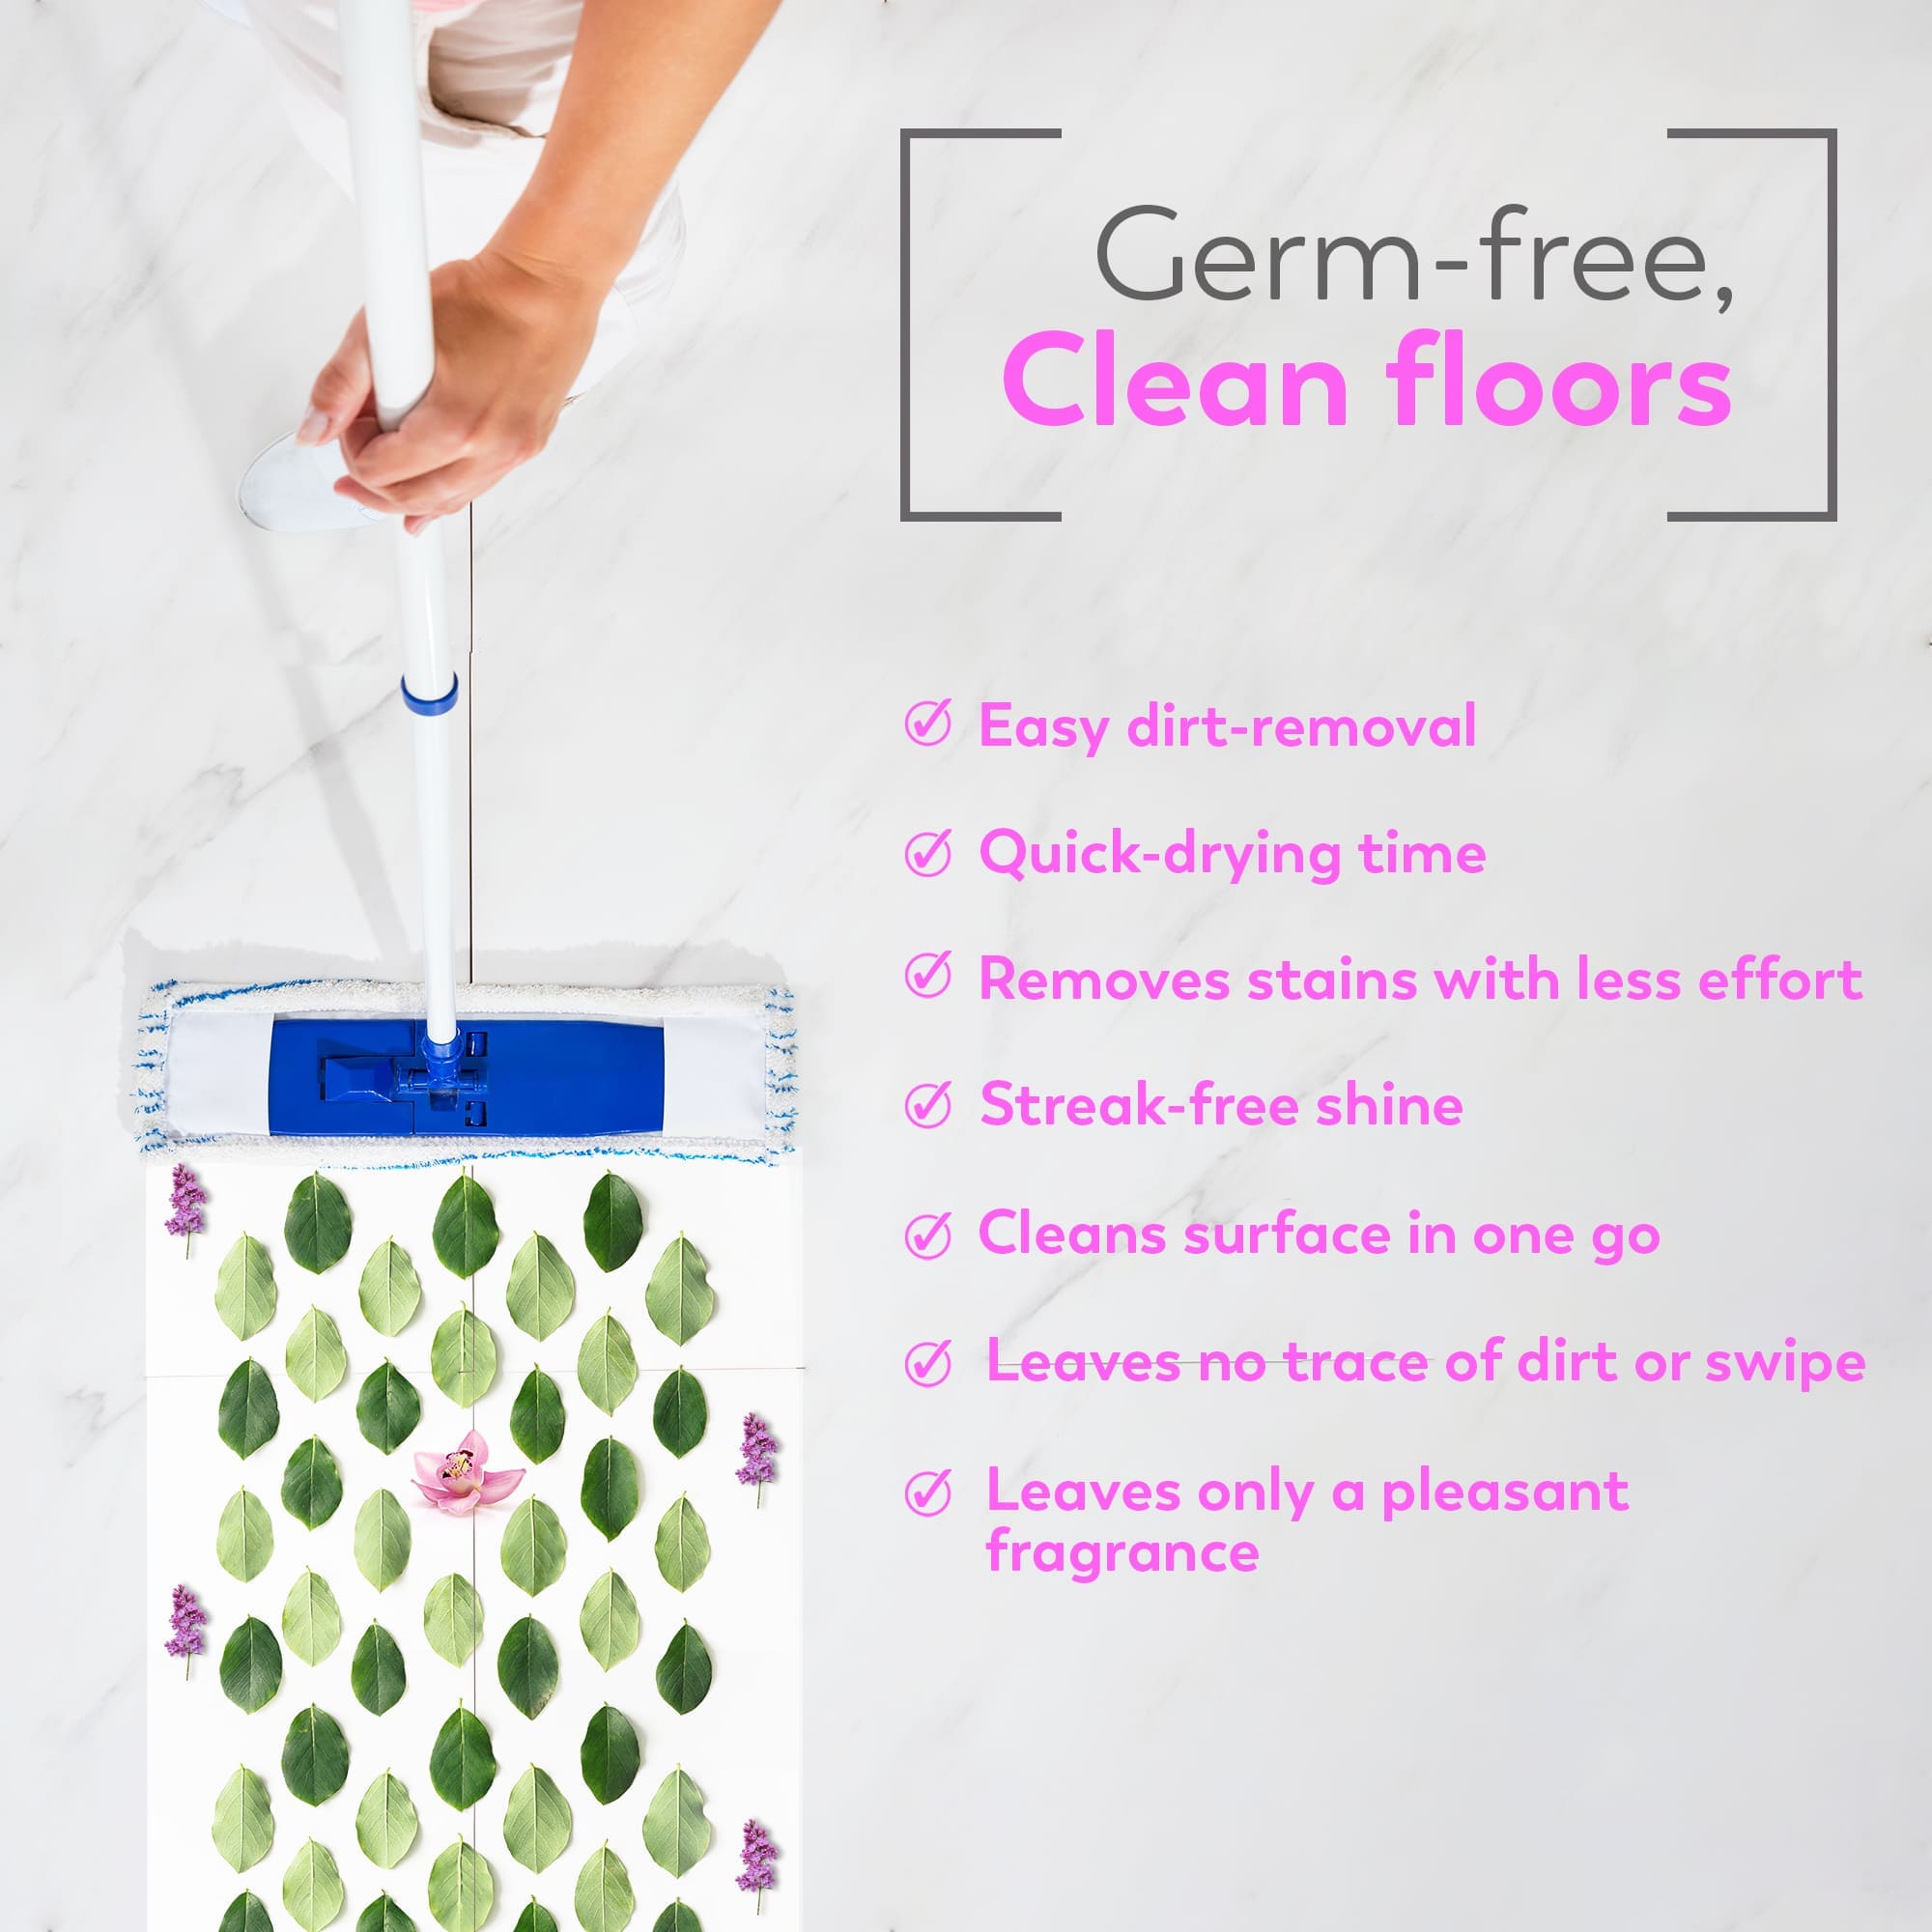 Dishwashing Gel Zesty Blast + Floor Cleaner Floral Fresh + All Purpose Cleaner Lavender Lush #size_500 ML Pack of 3